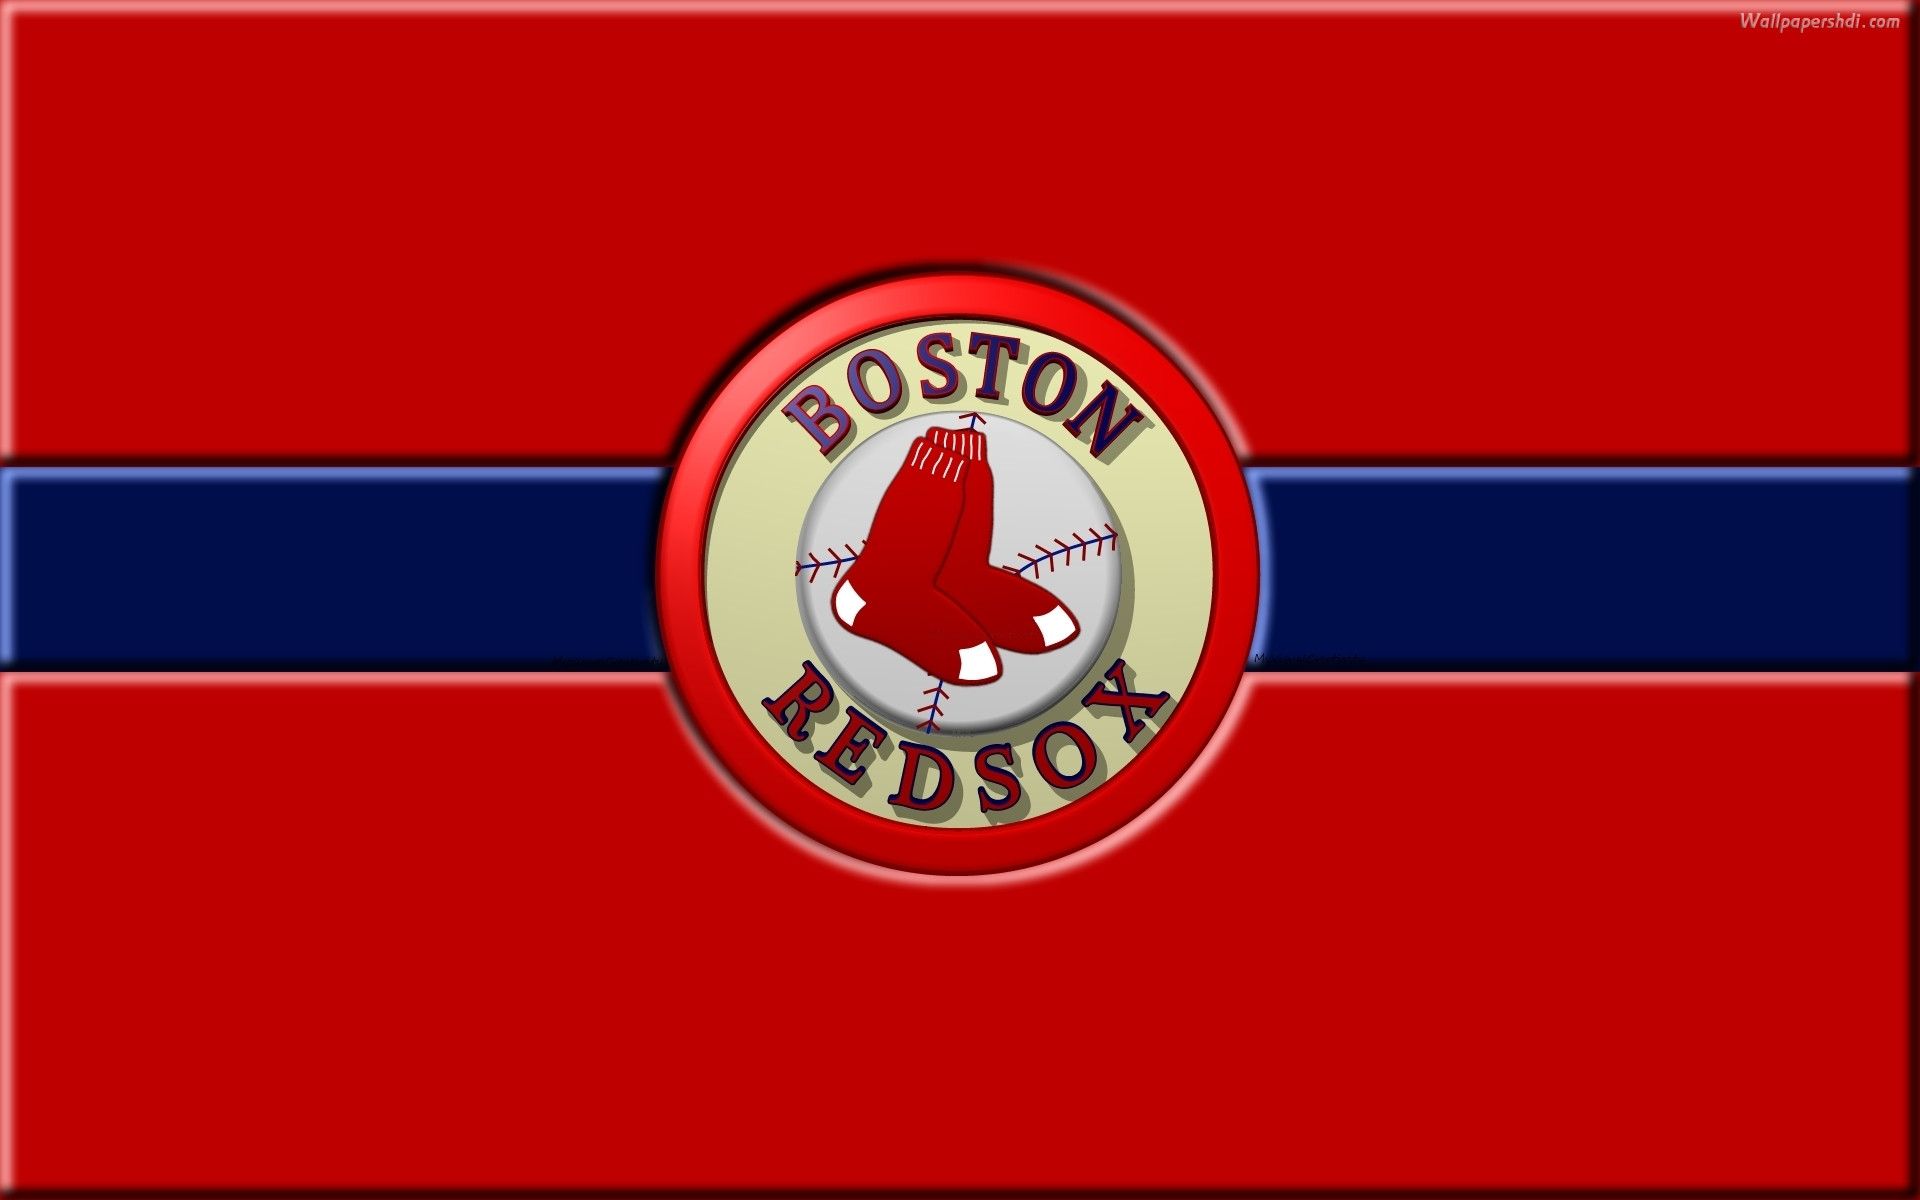 Red sox logo wallpaper